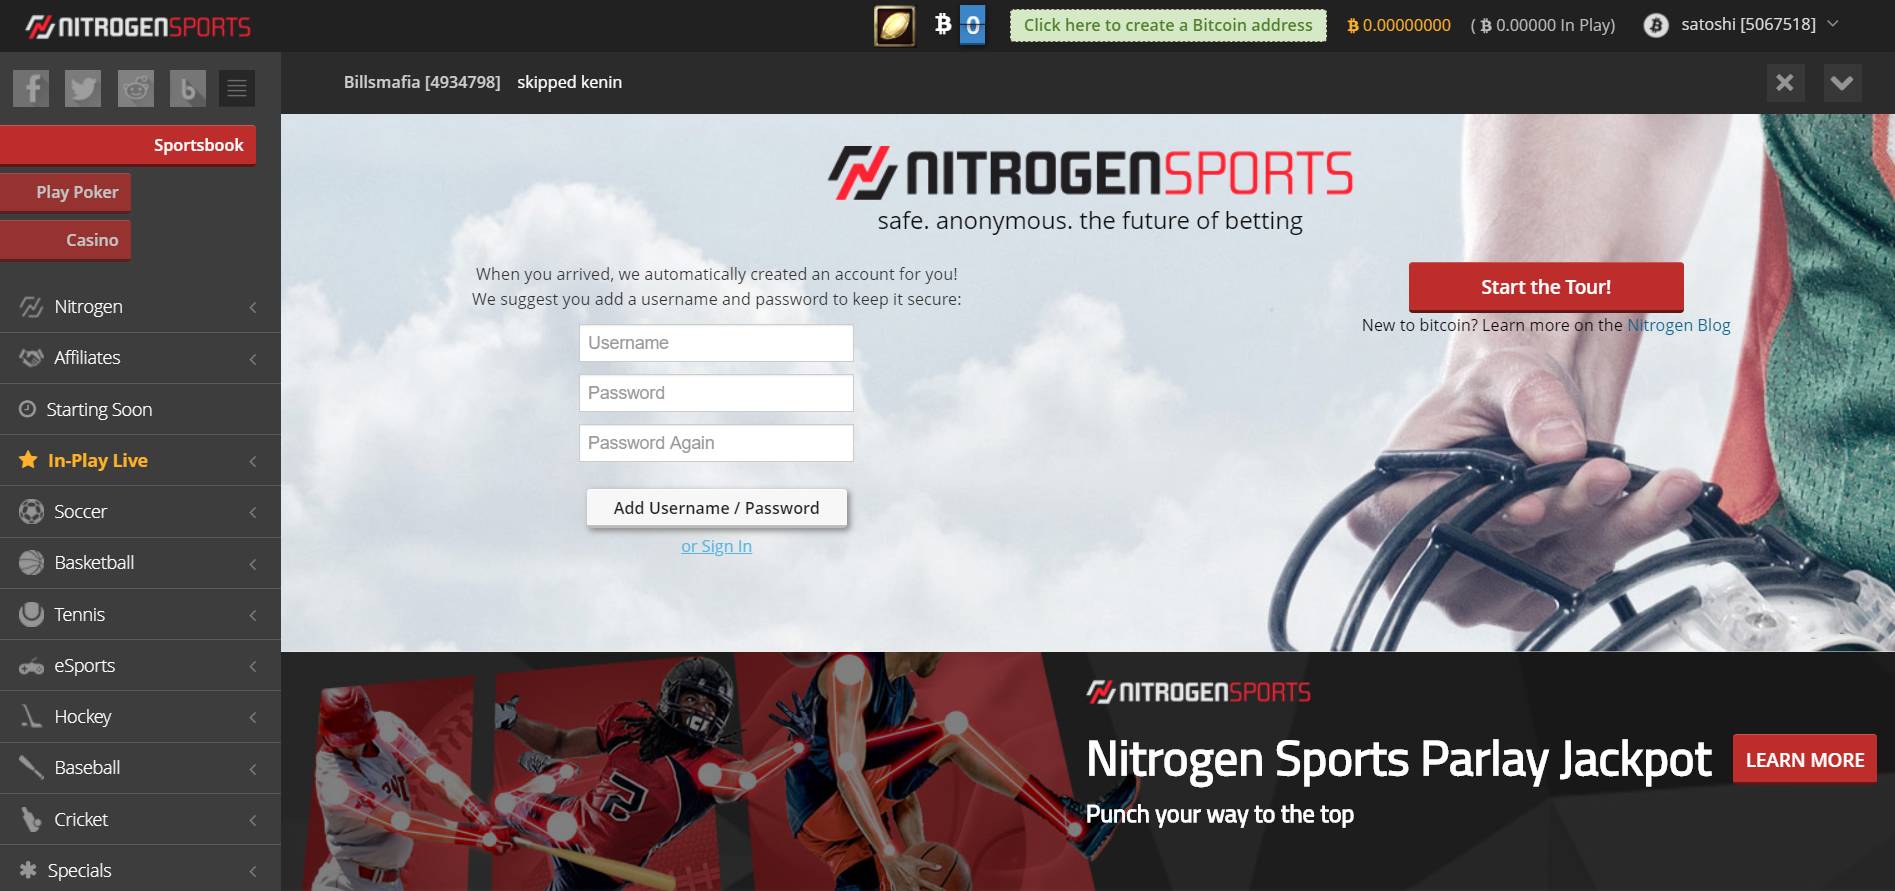 Nitrogen Sports